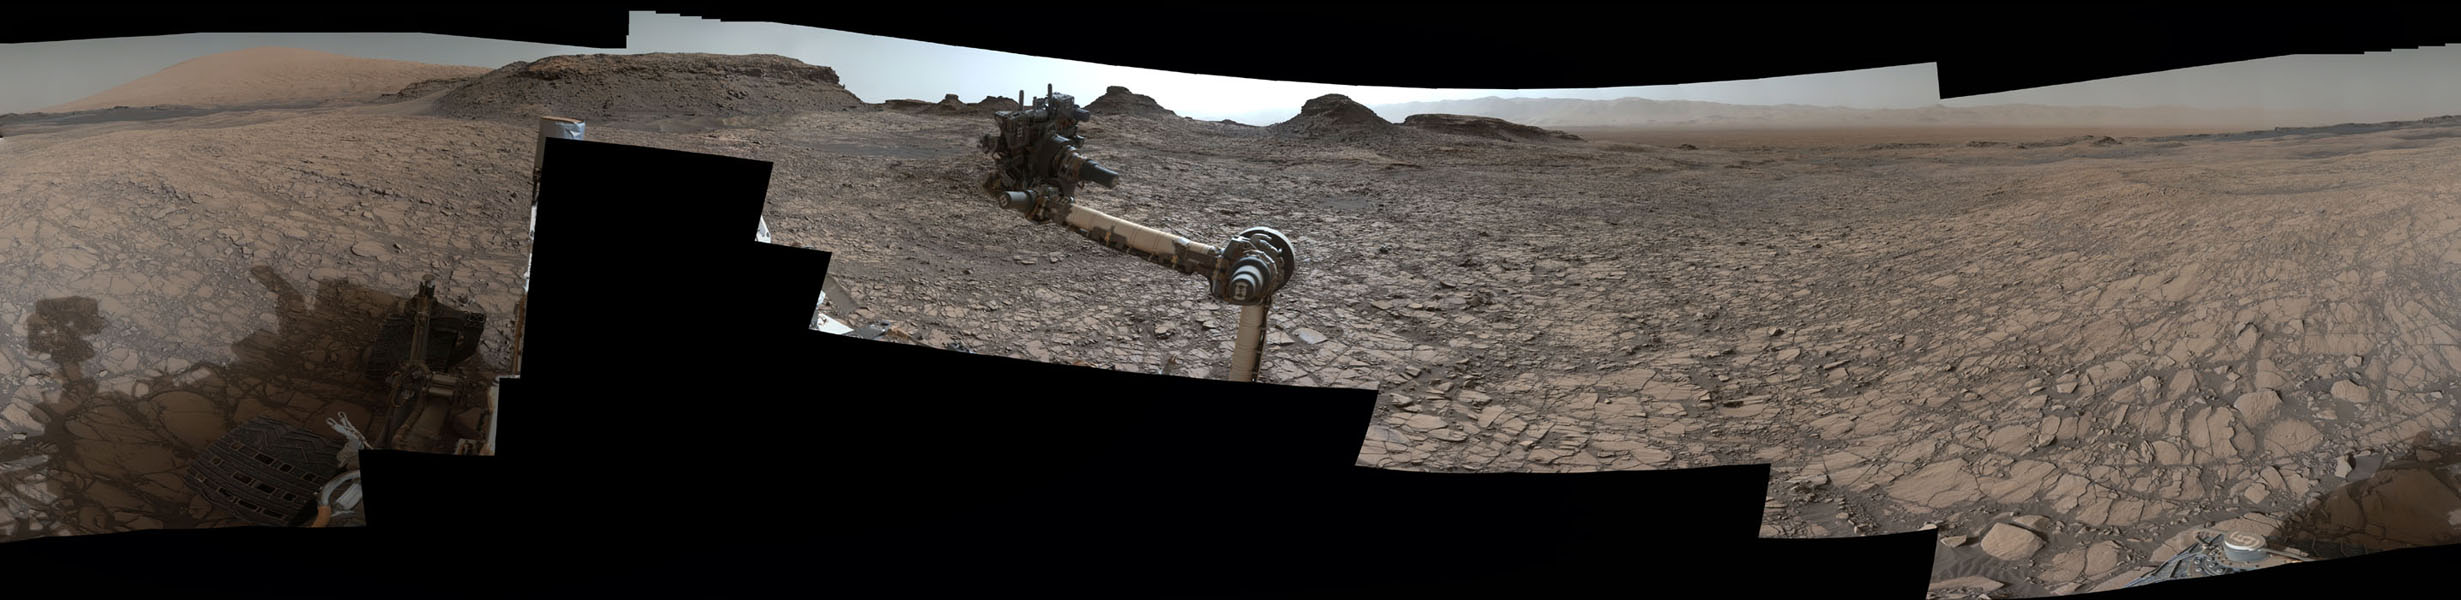 This Martian Landscape Looks Like the American Desert